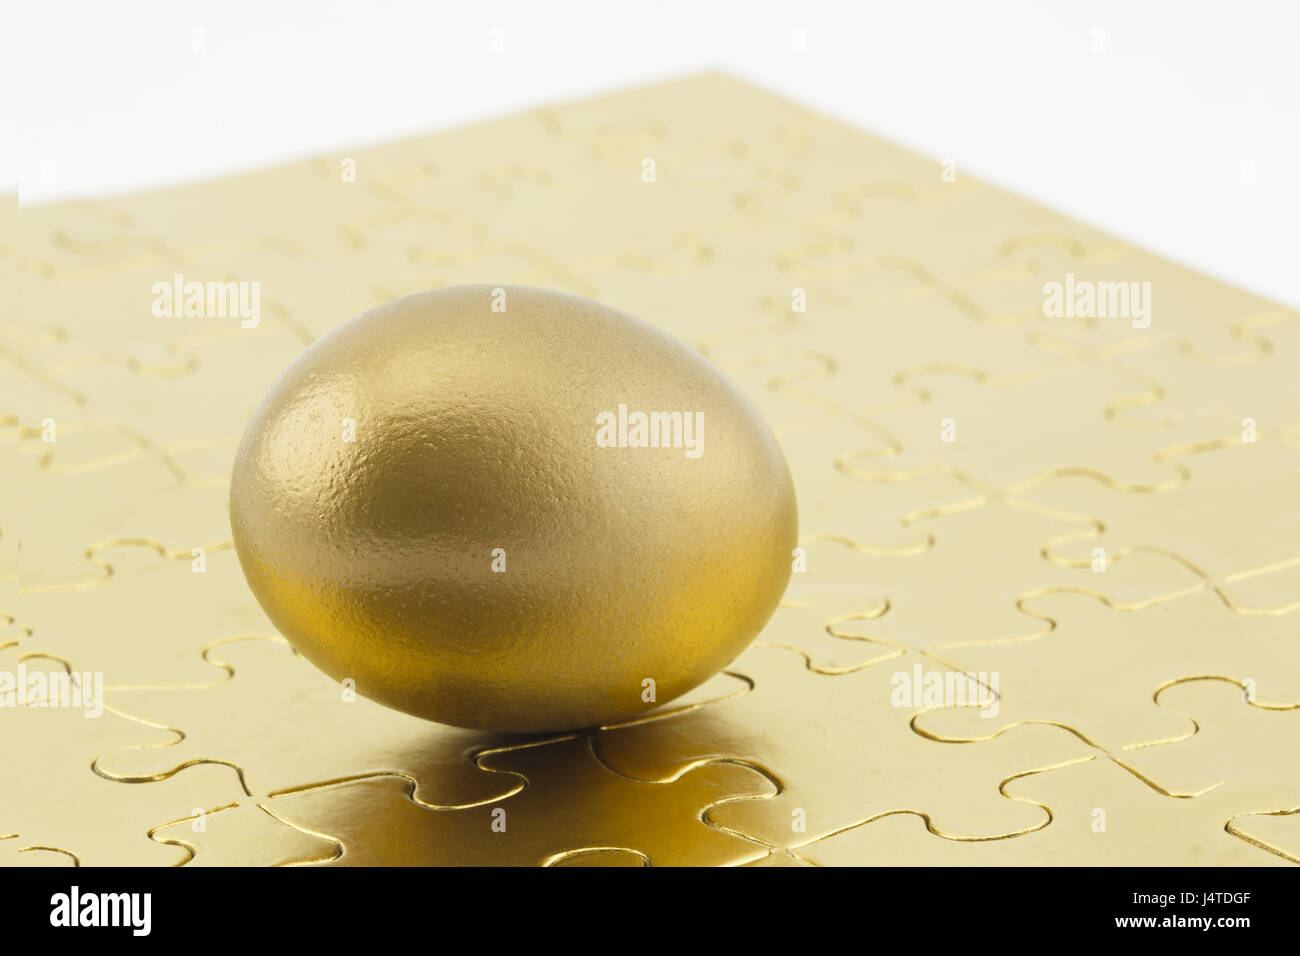 Gold egg at puzzle corner symbolizes successful solution Stock Photo